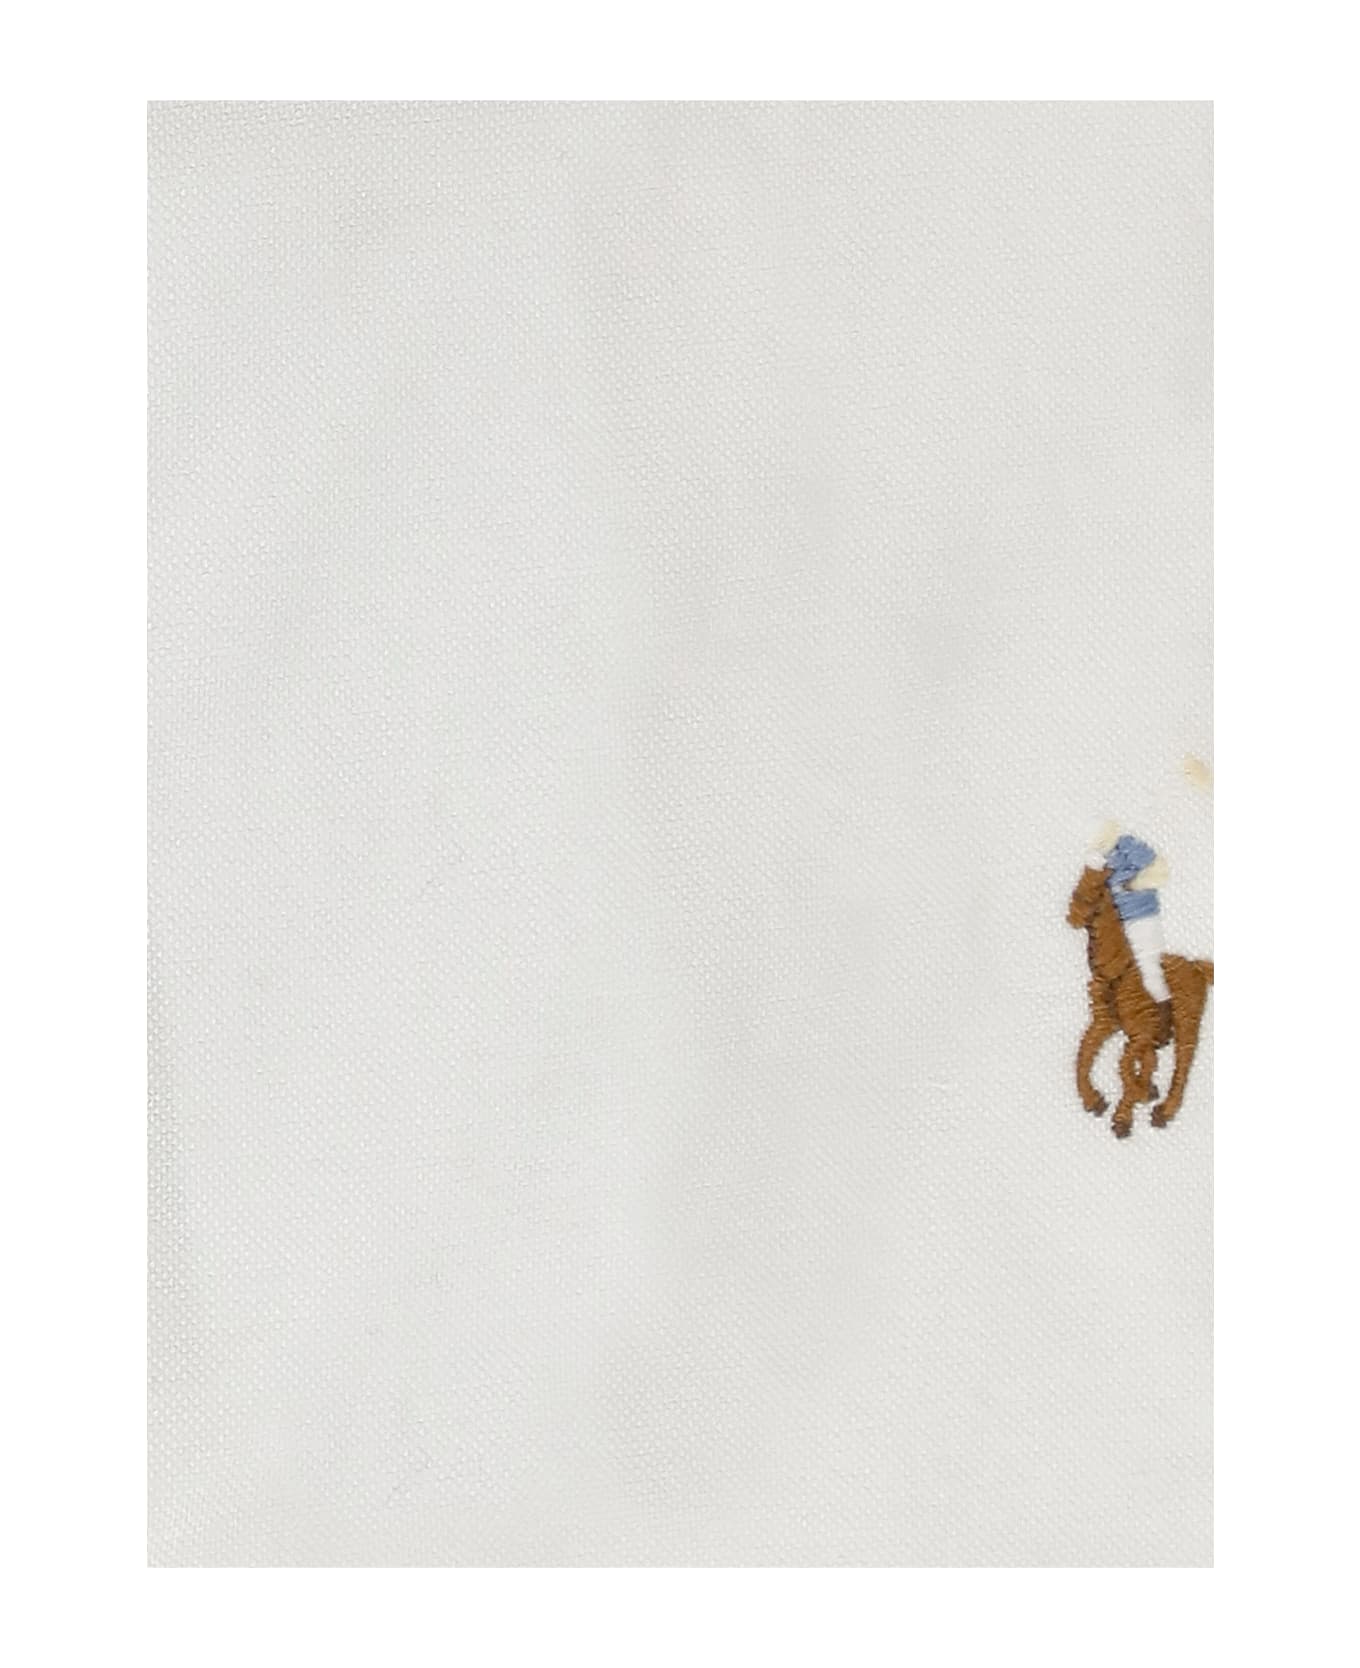 Polo Ralph Lauren White Cotton Shirt - White